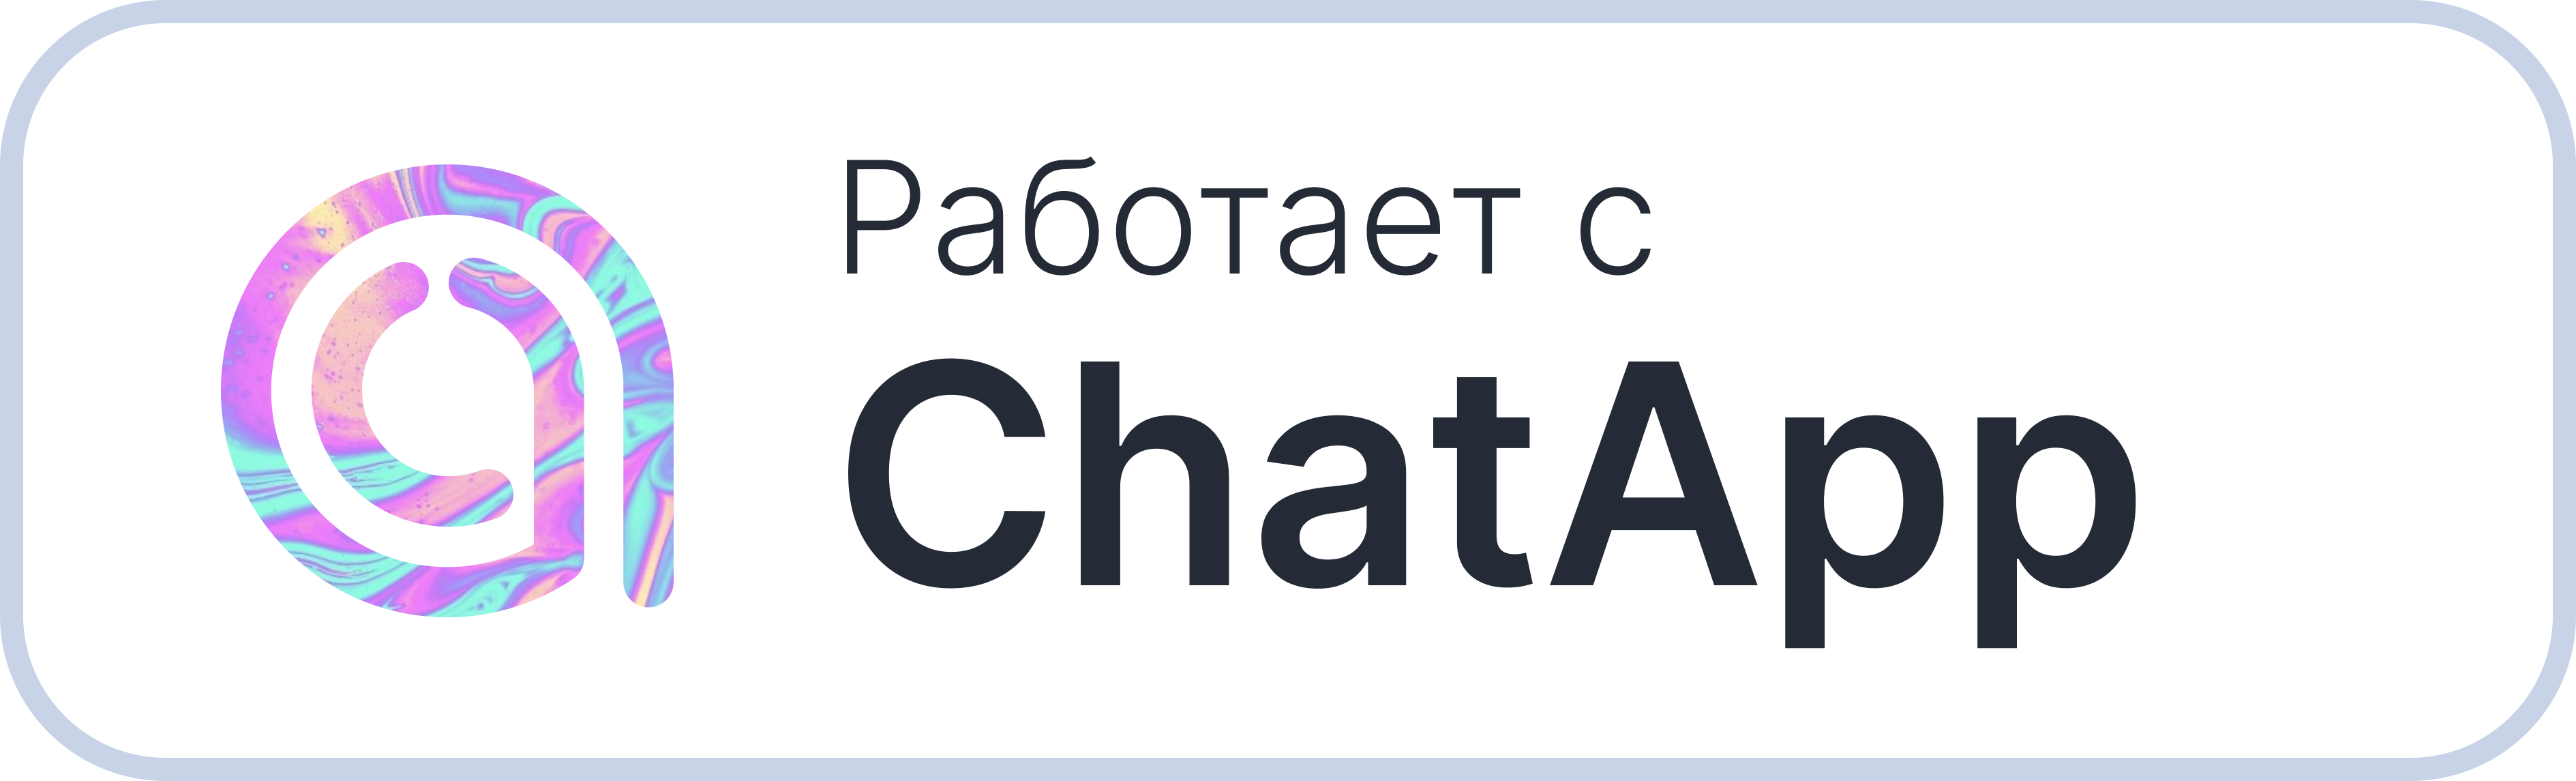 chatapp